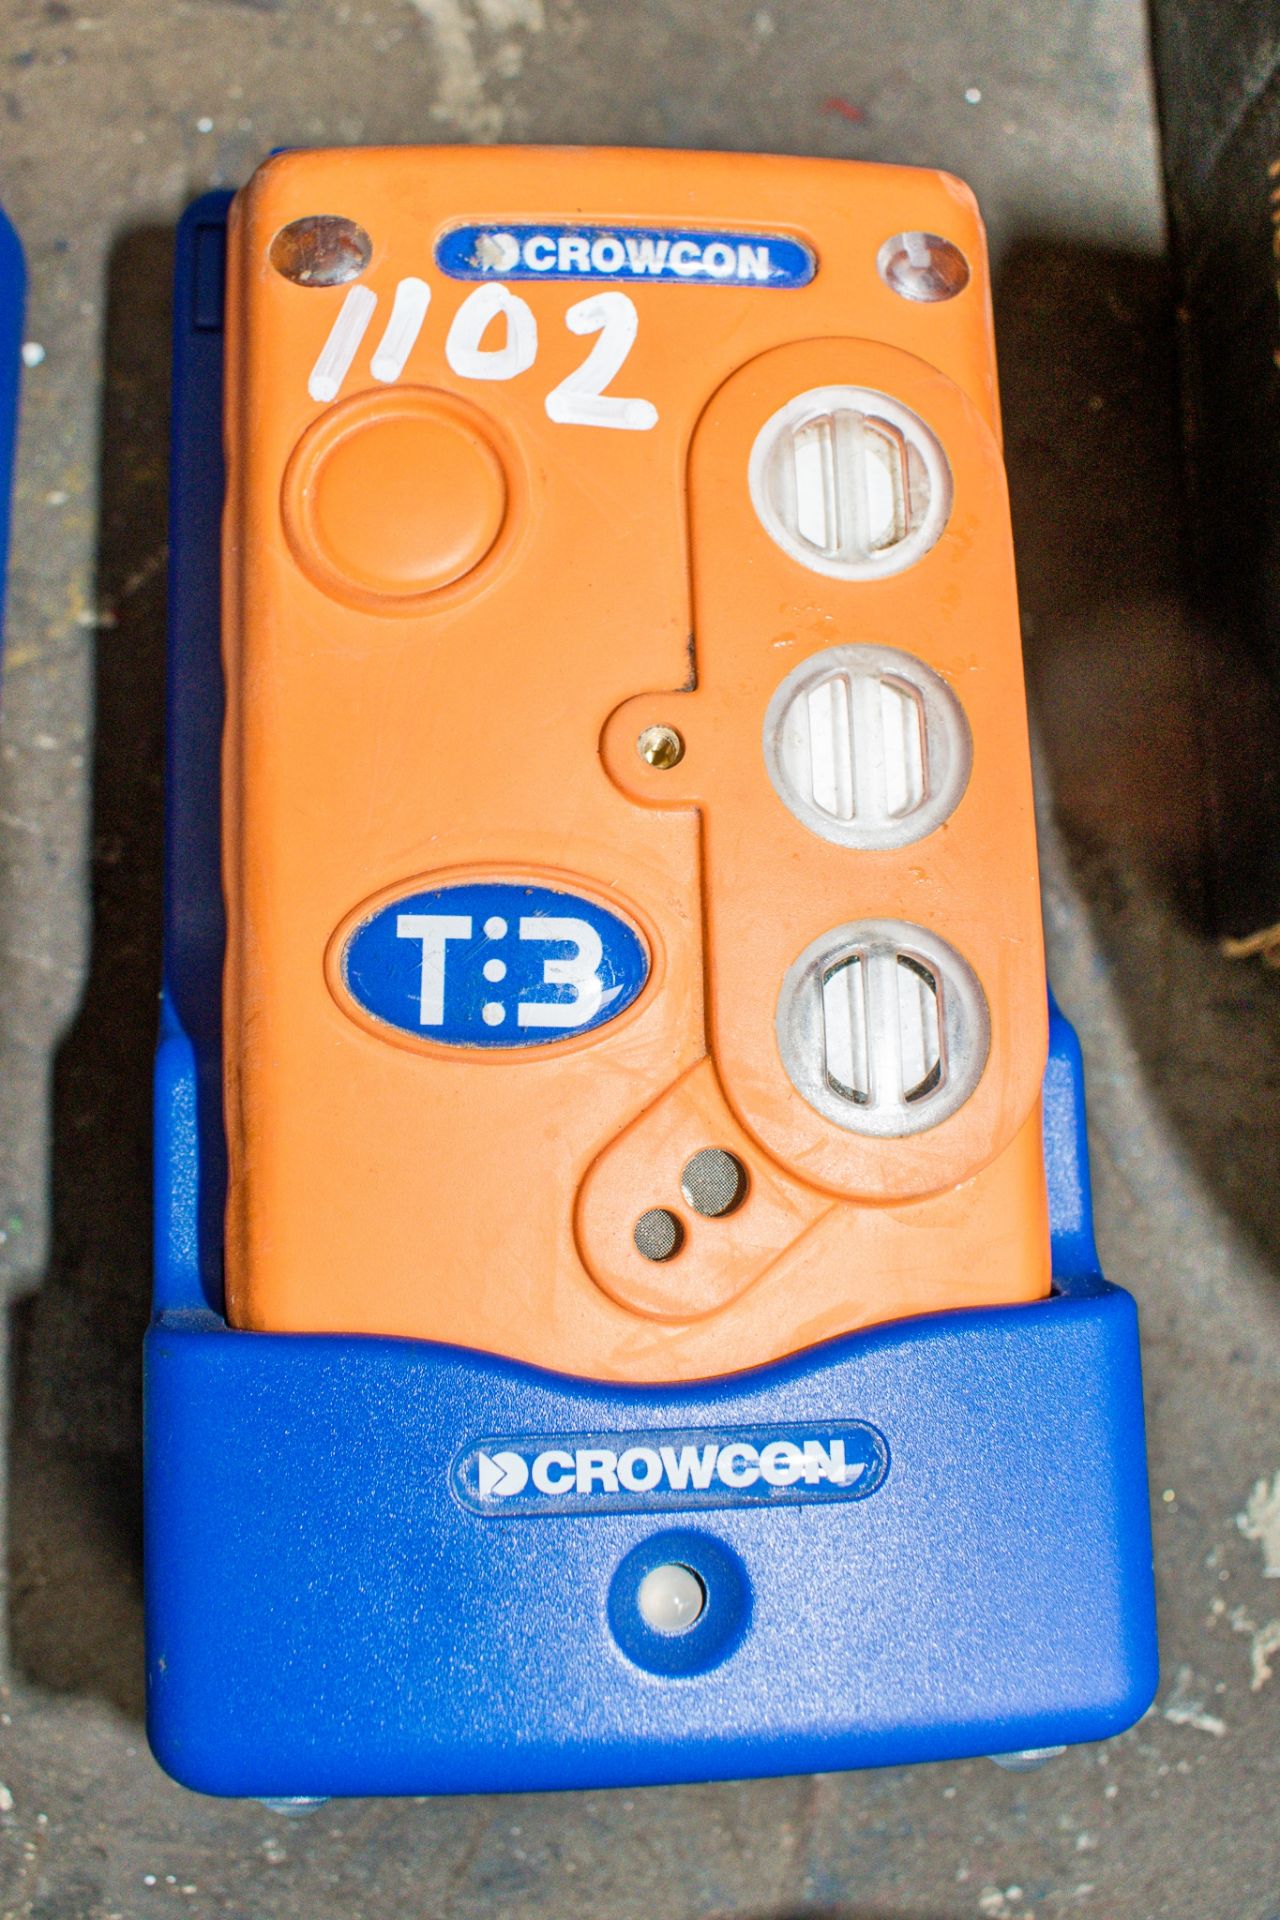 Crowcon gas detector c/w charging dock A702914 ** No lead **